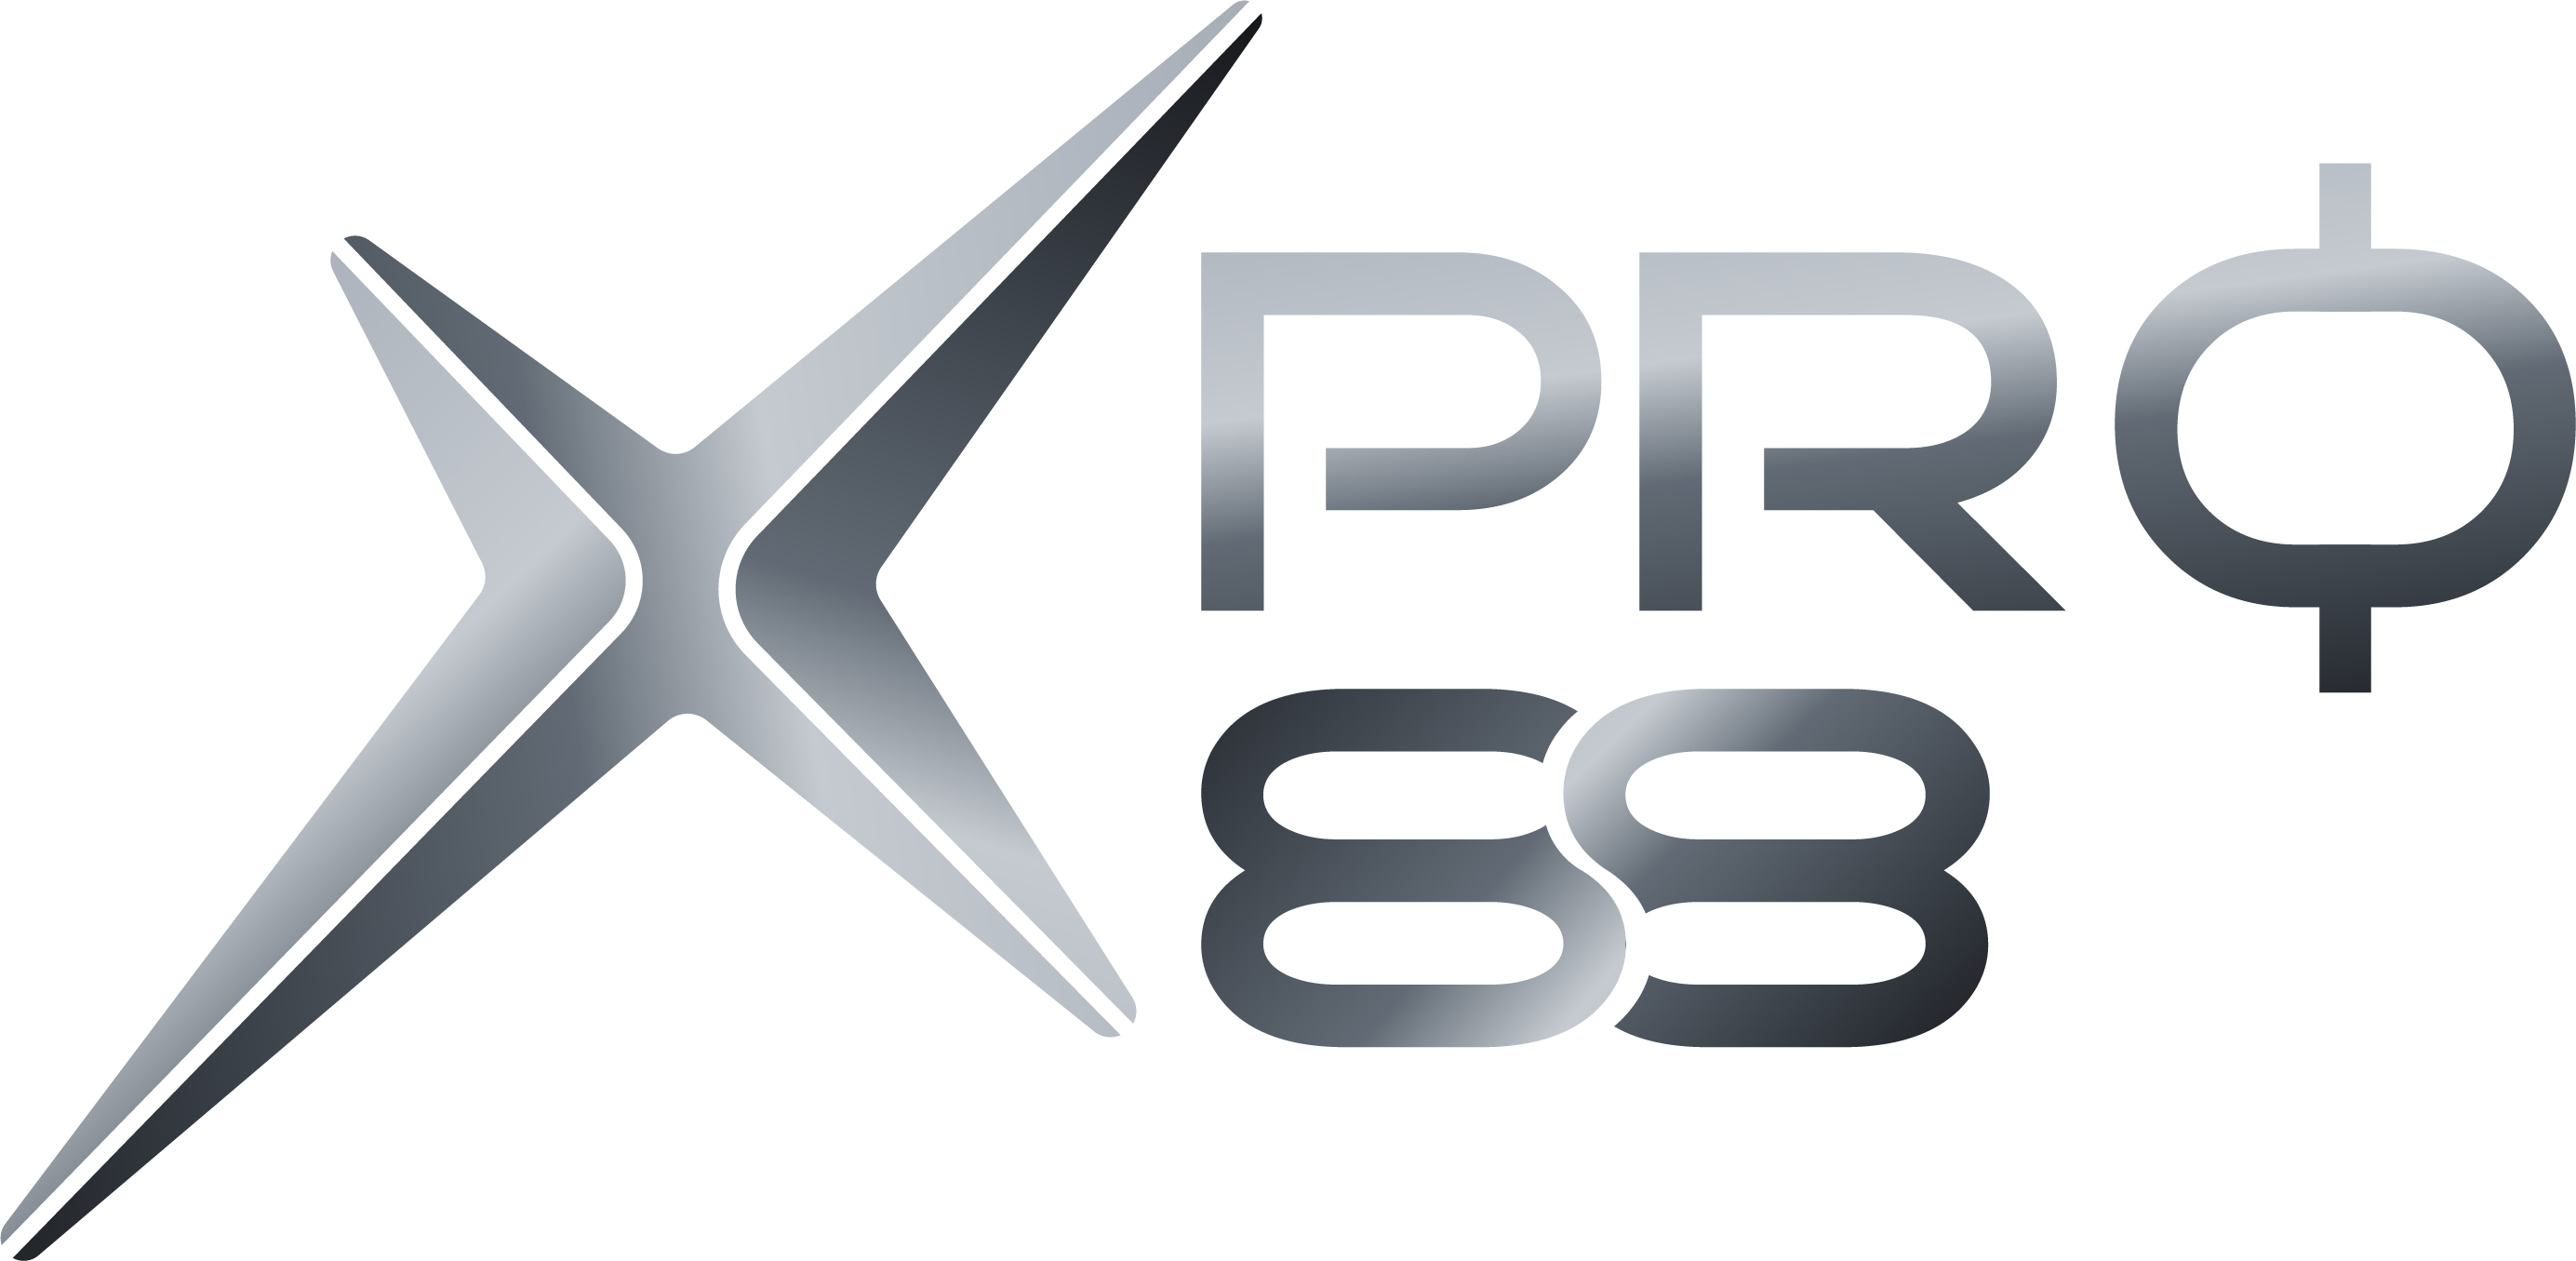 XPRO88 logo